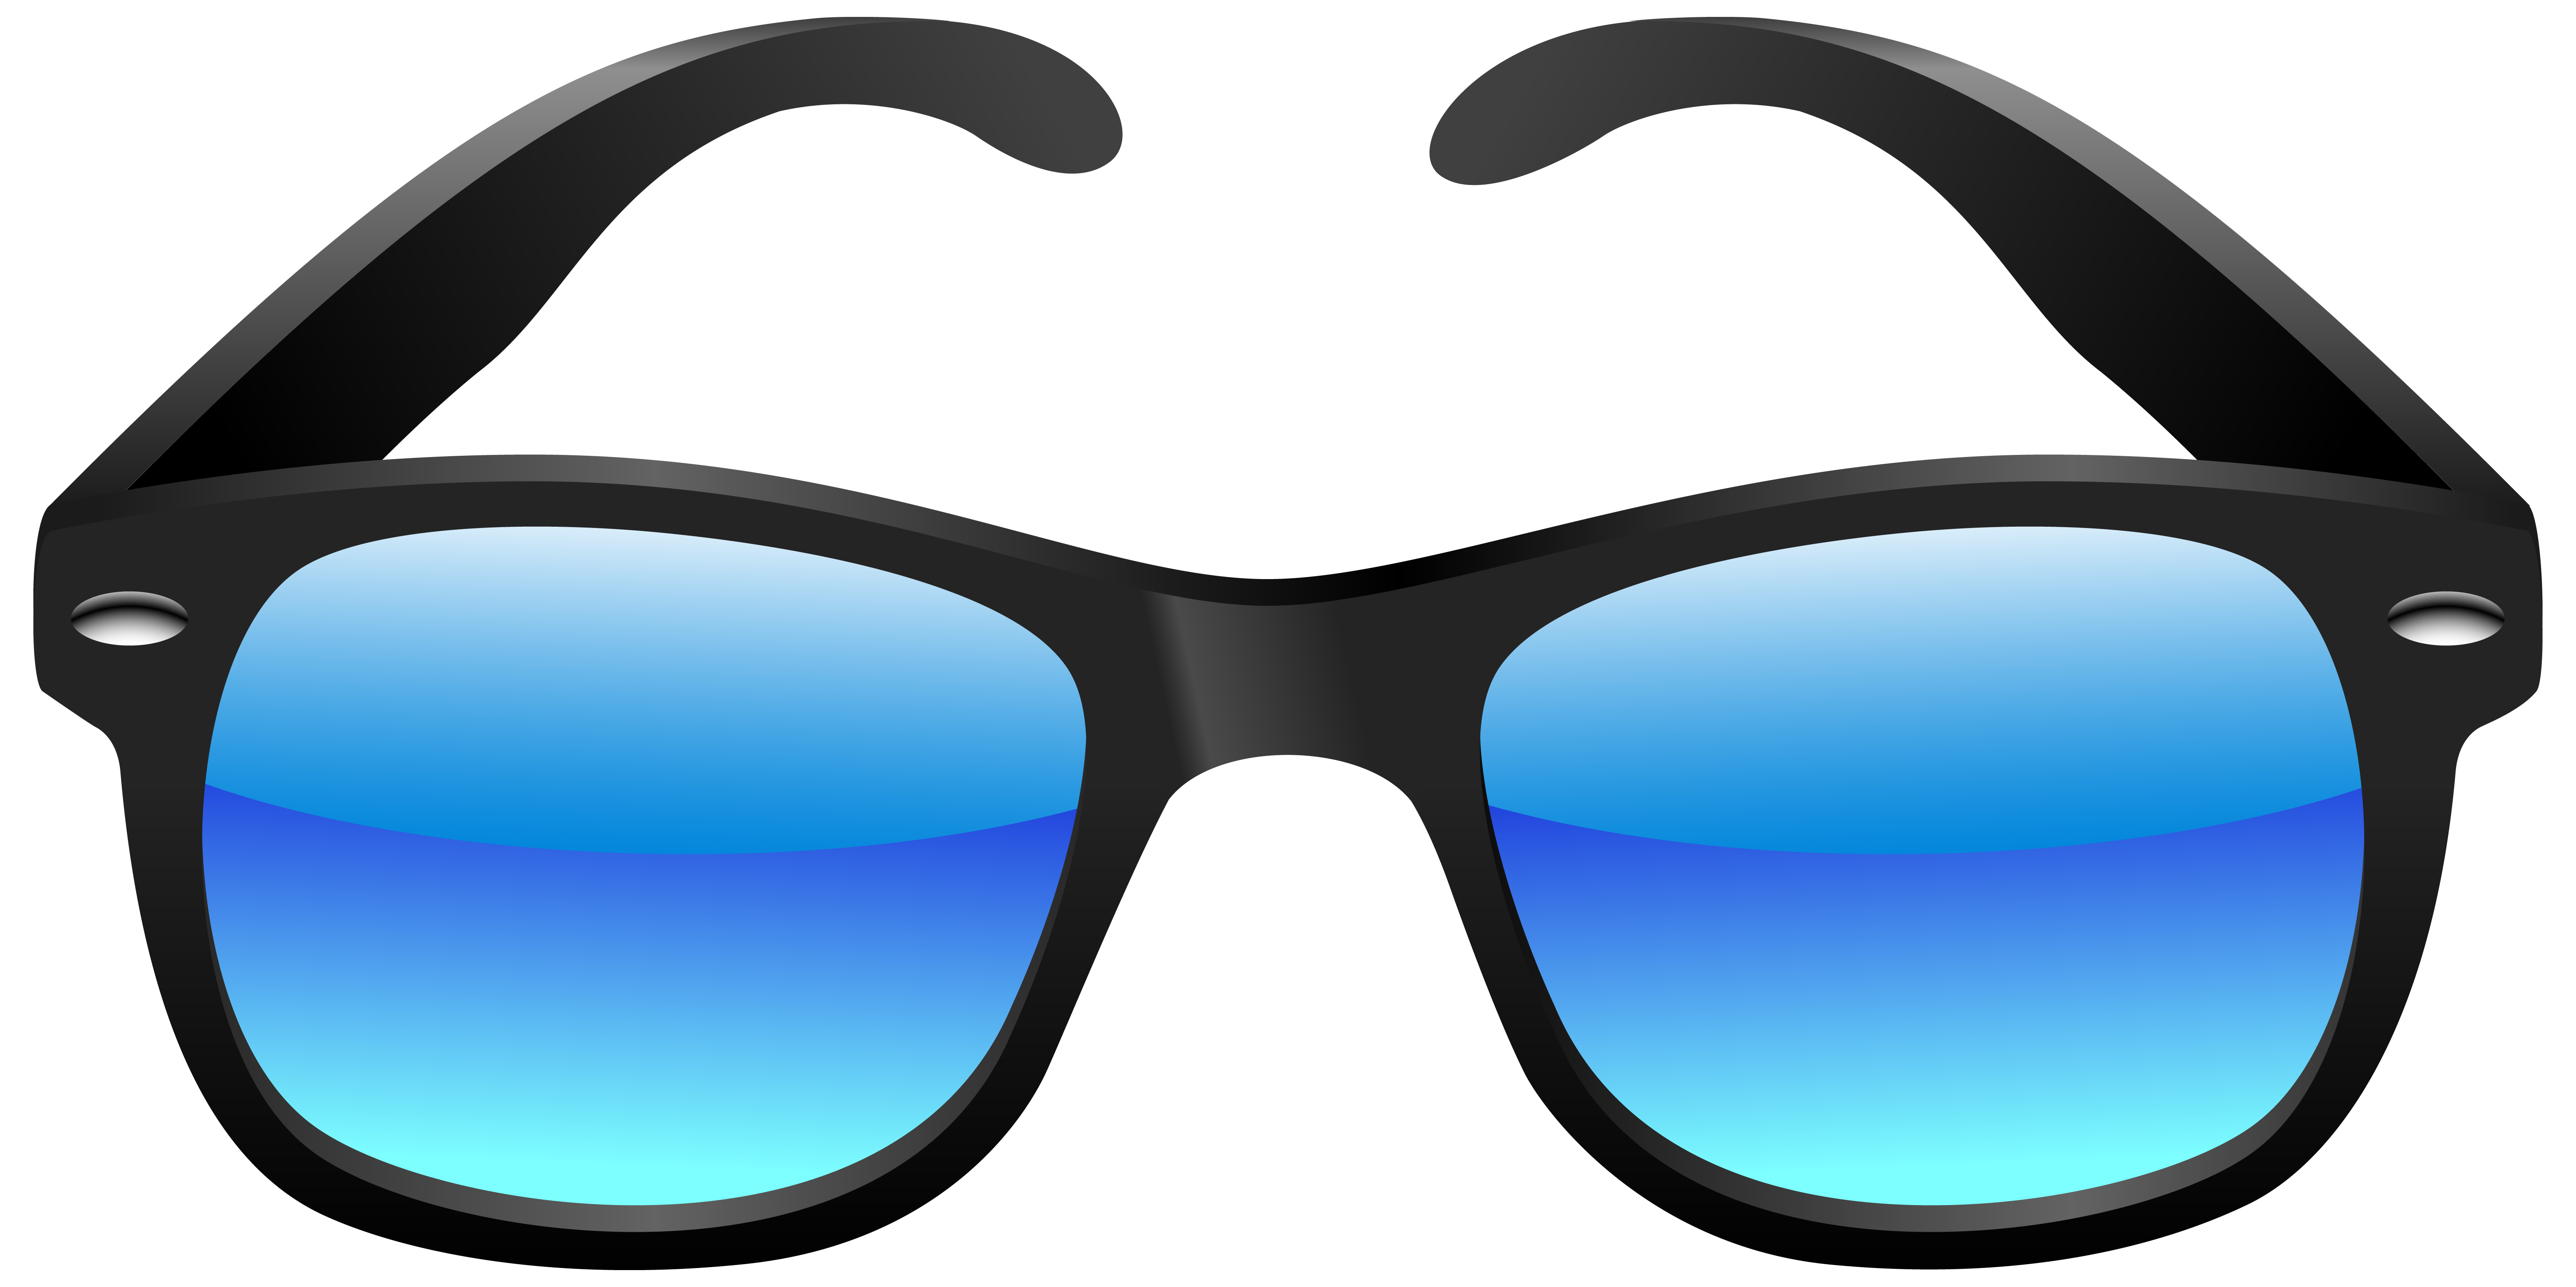 Clip art of sunglasses. Nail clipart hardware